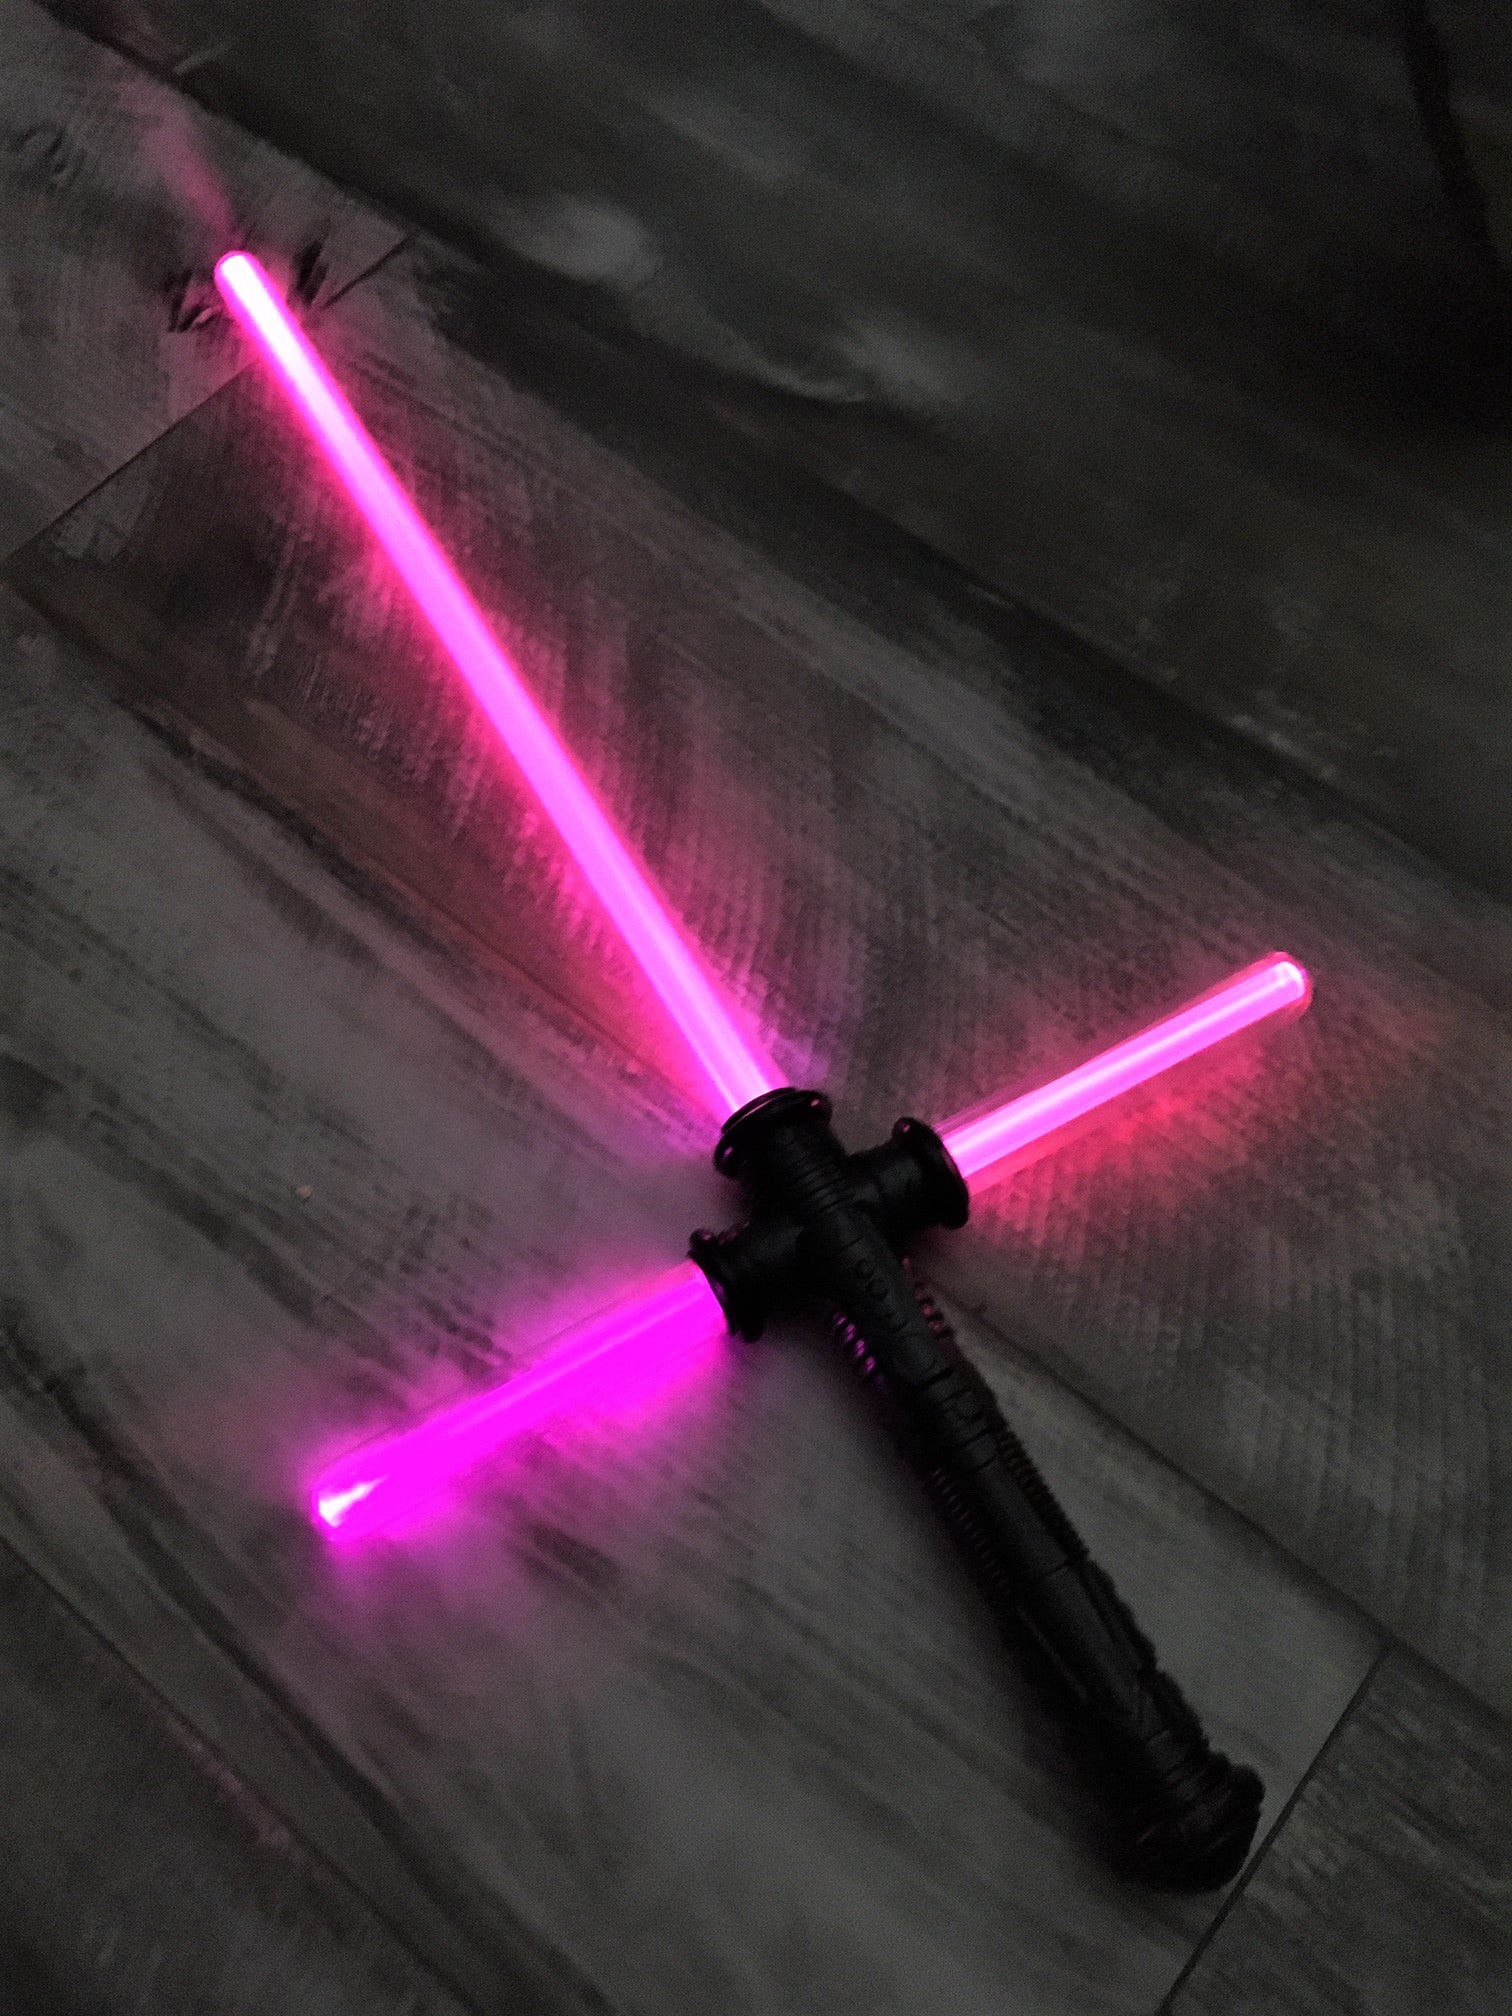 Kylo Ren Cross Guard Lightsaber Force FX Toy Saber Sword